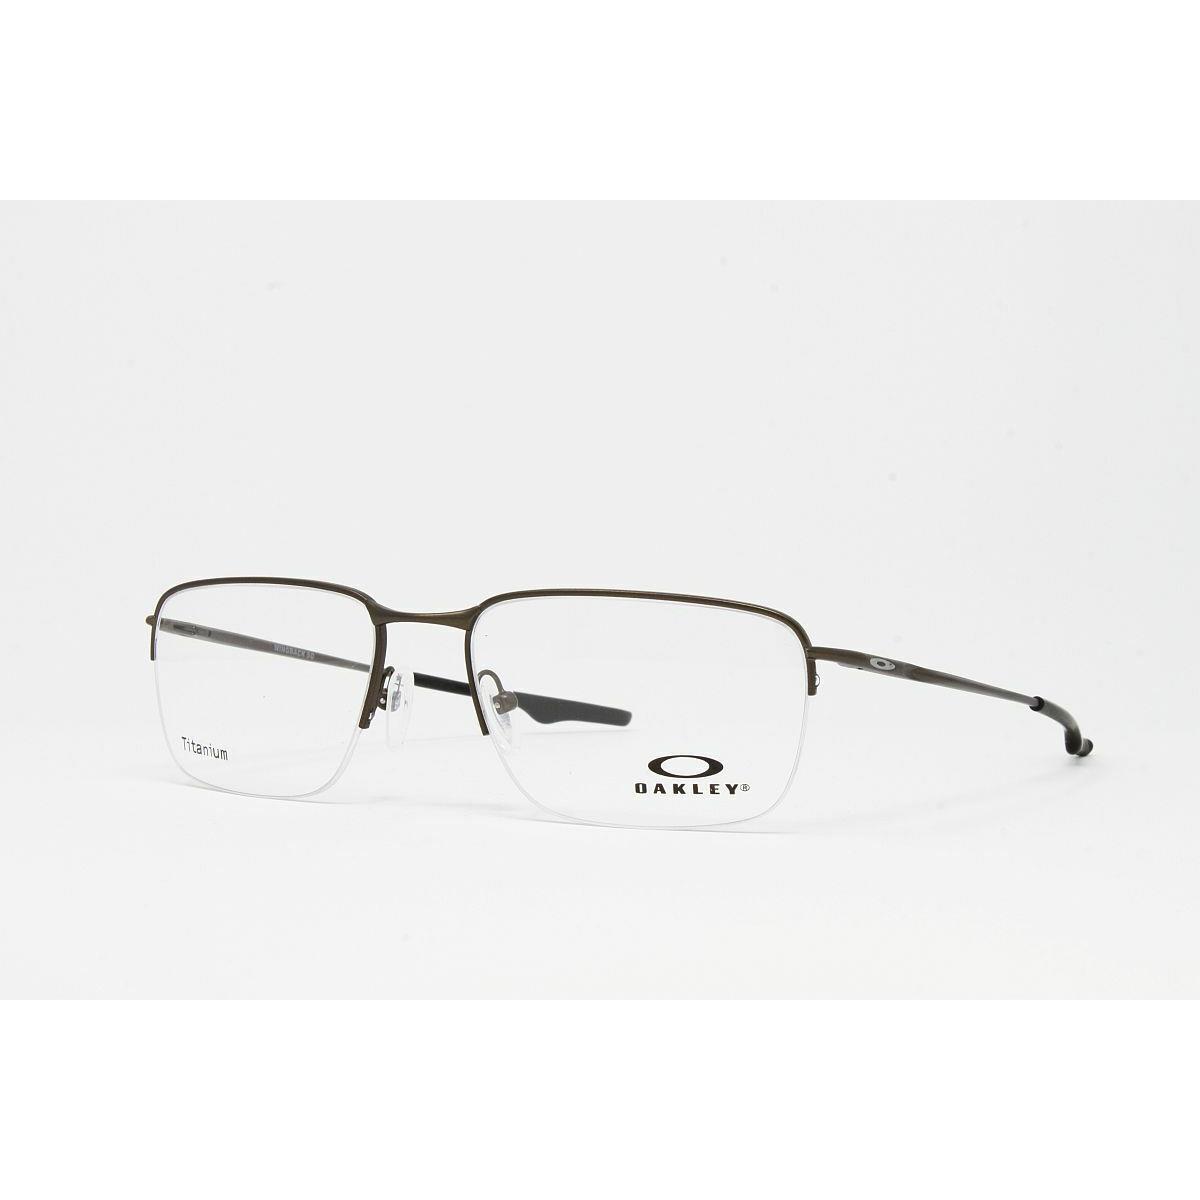 Oakley Optical Wingback SQ OX5148 02 Pewter Eyeglasses 54mm Frames RX